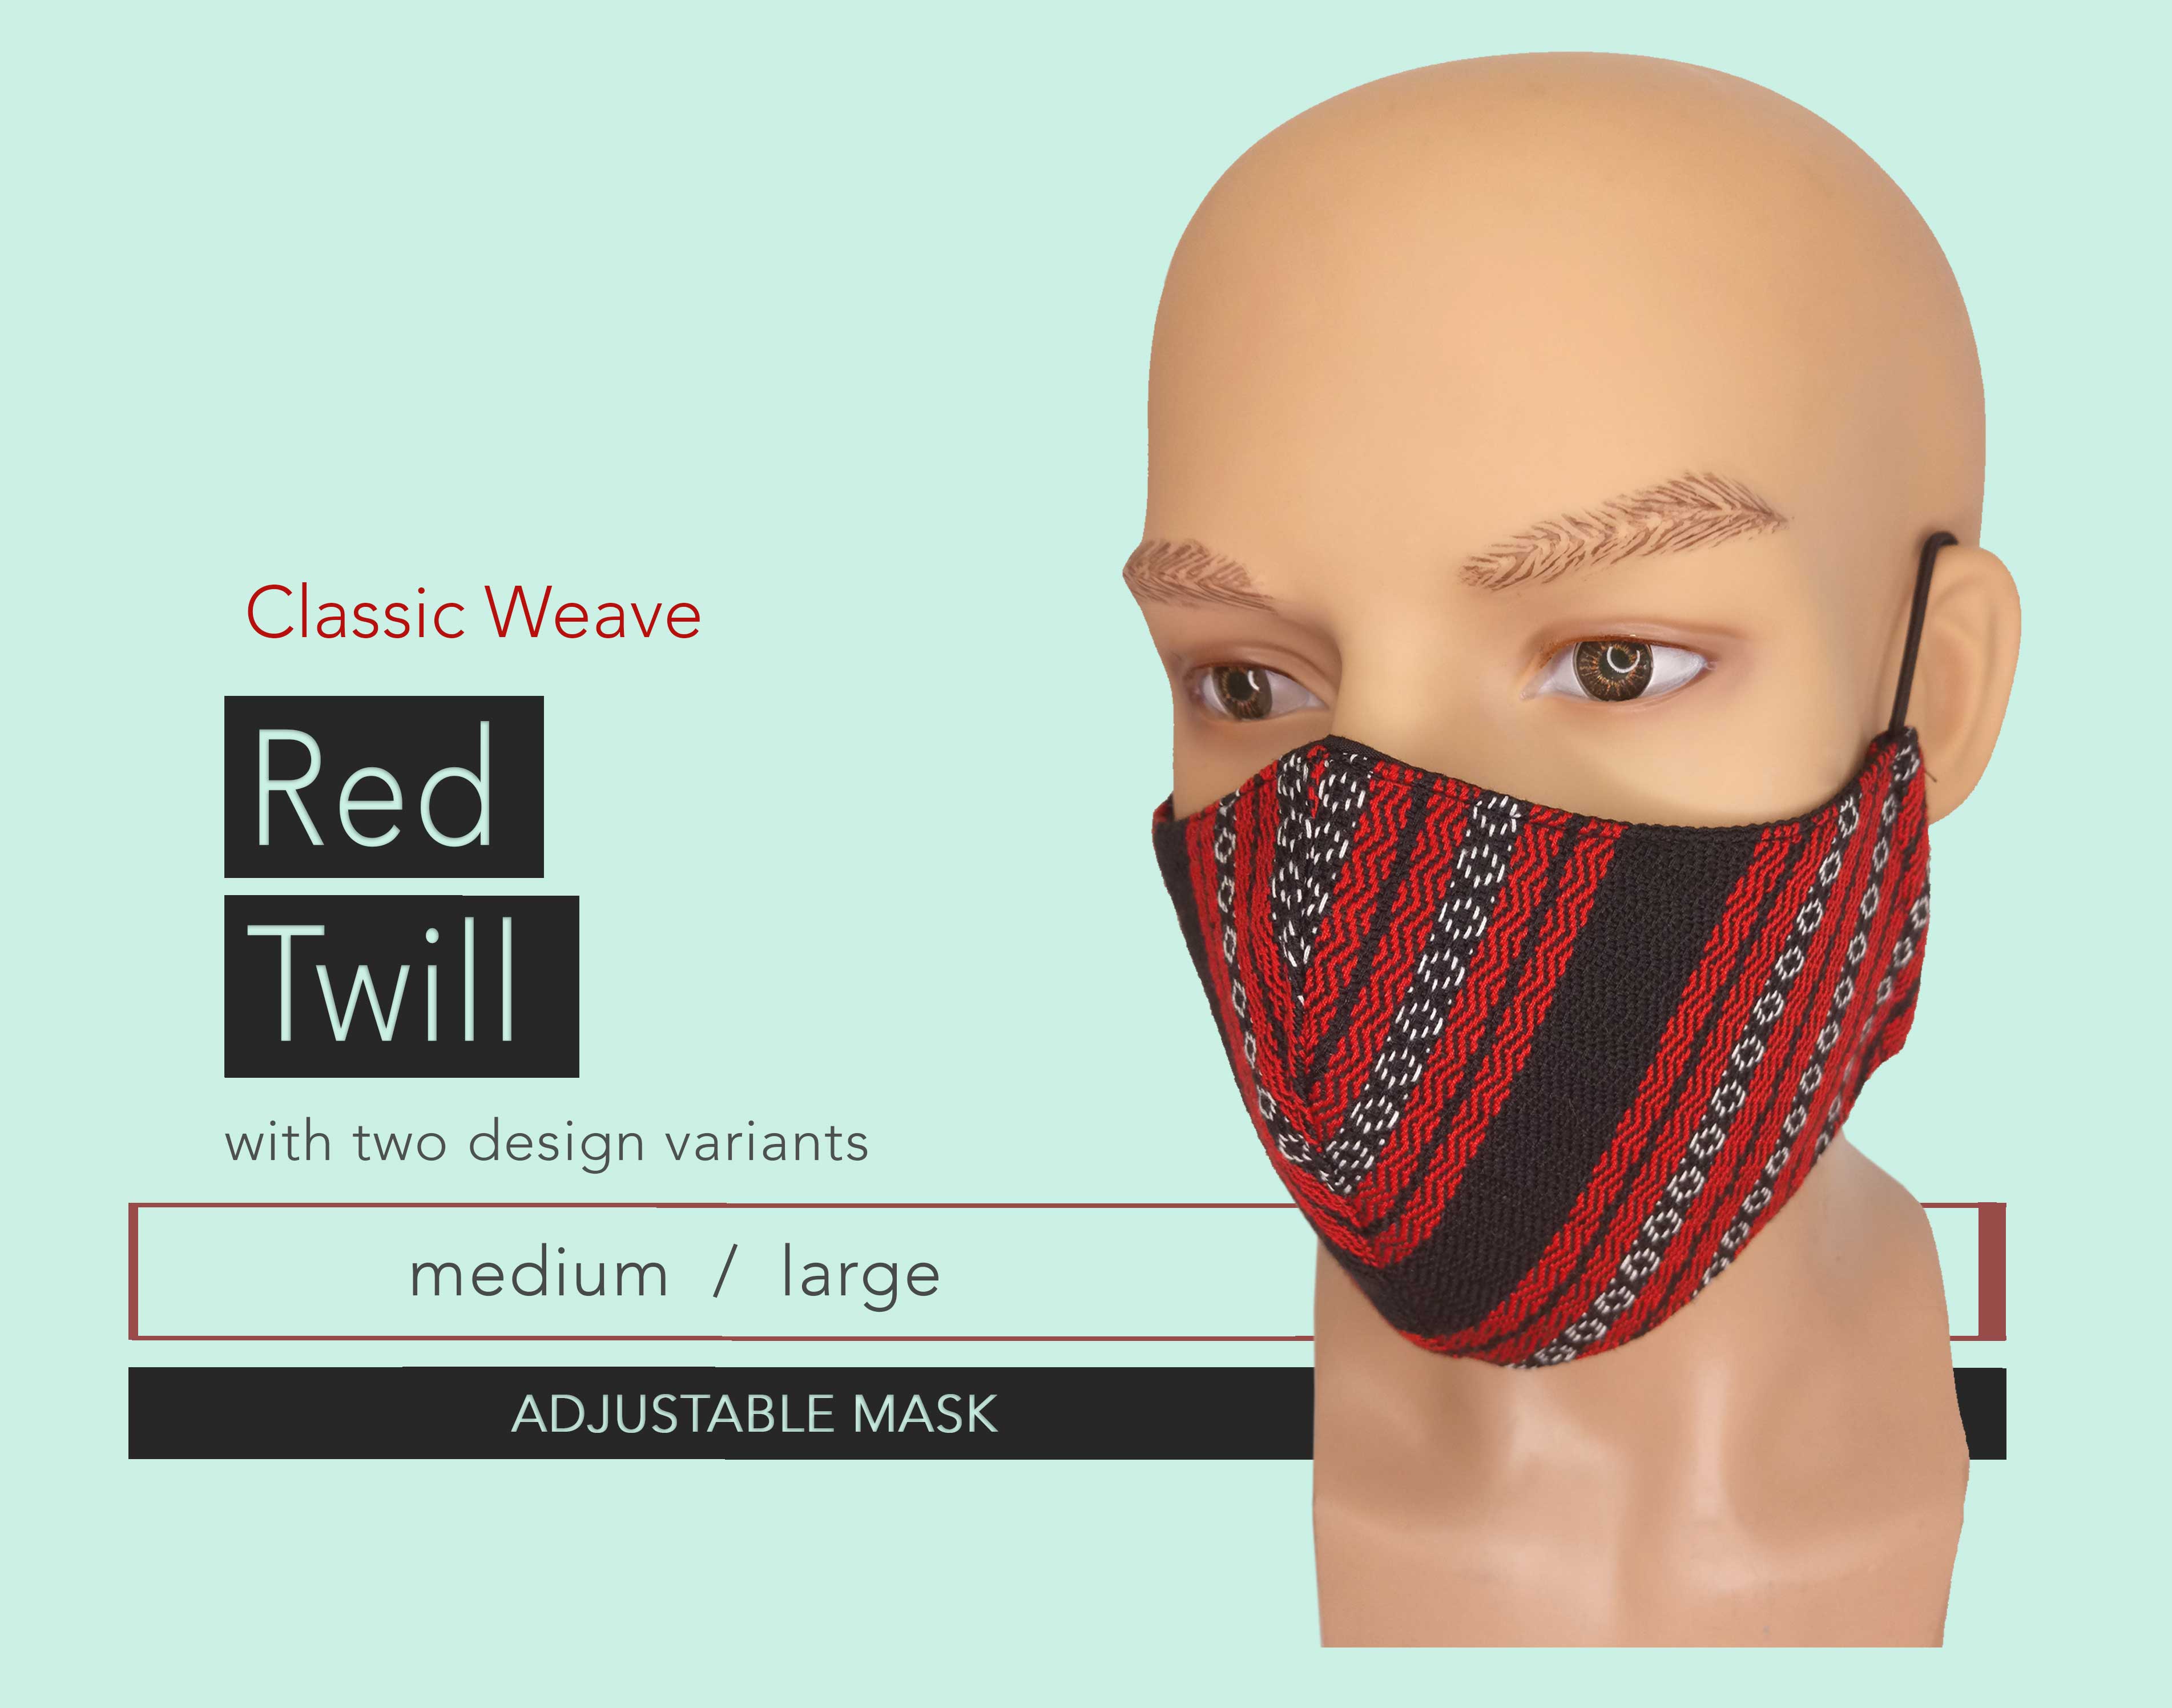 Red Twill